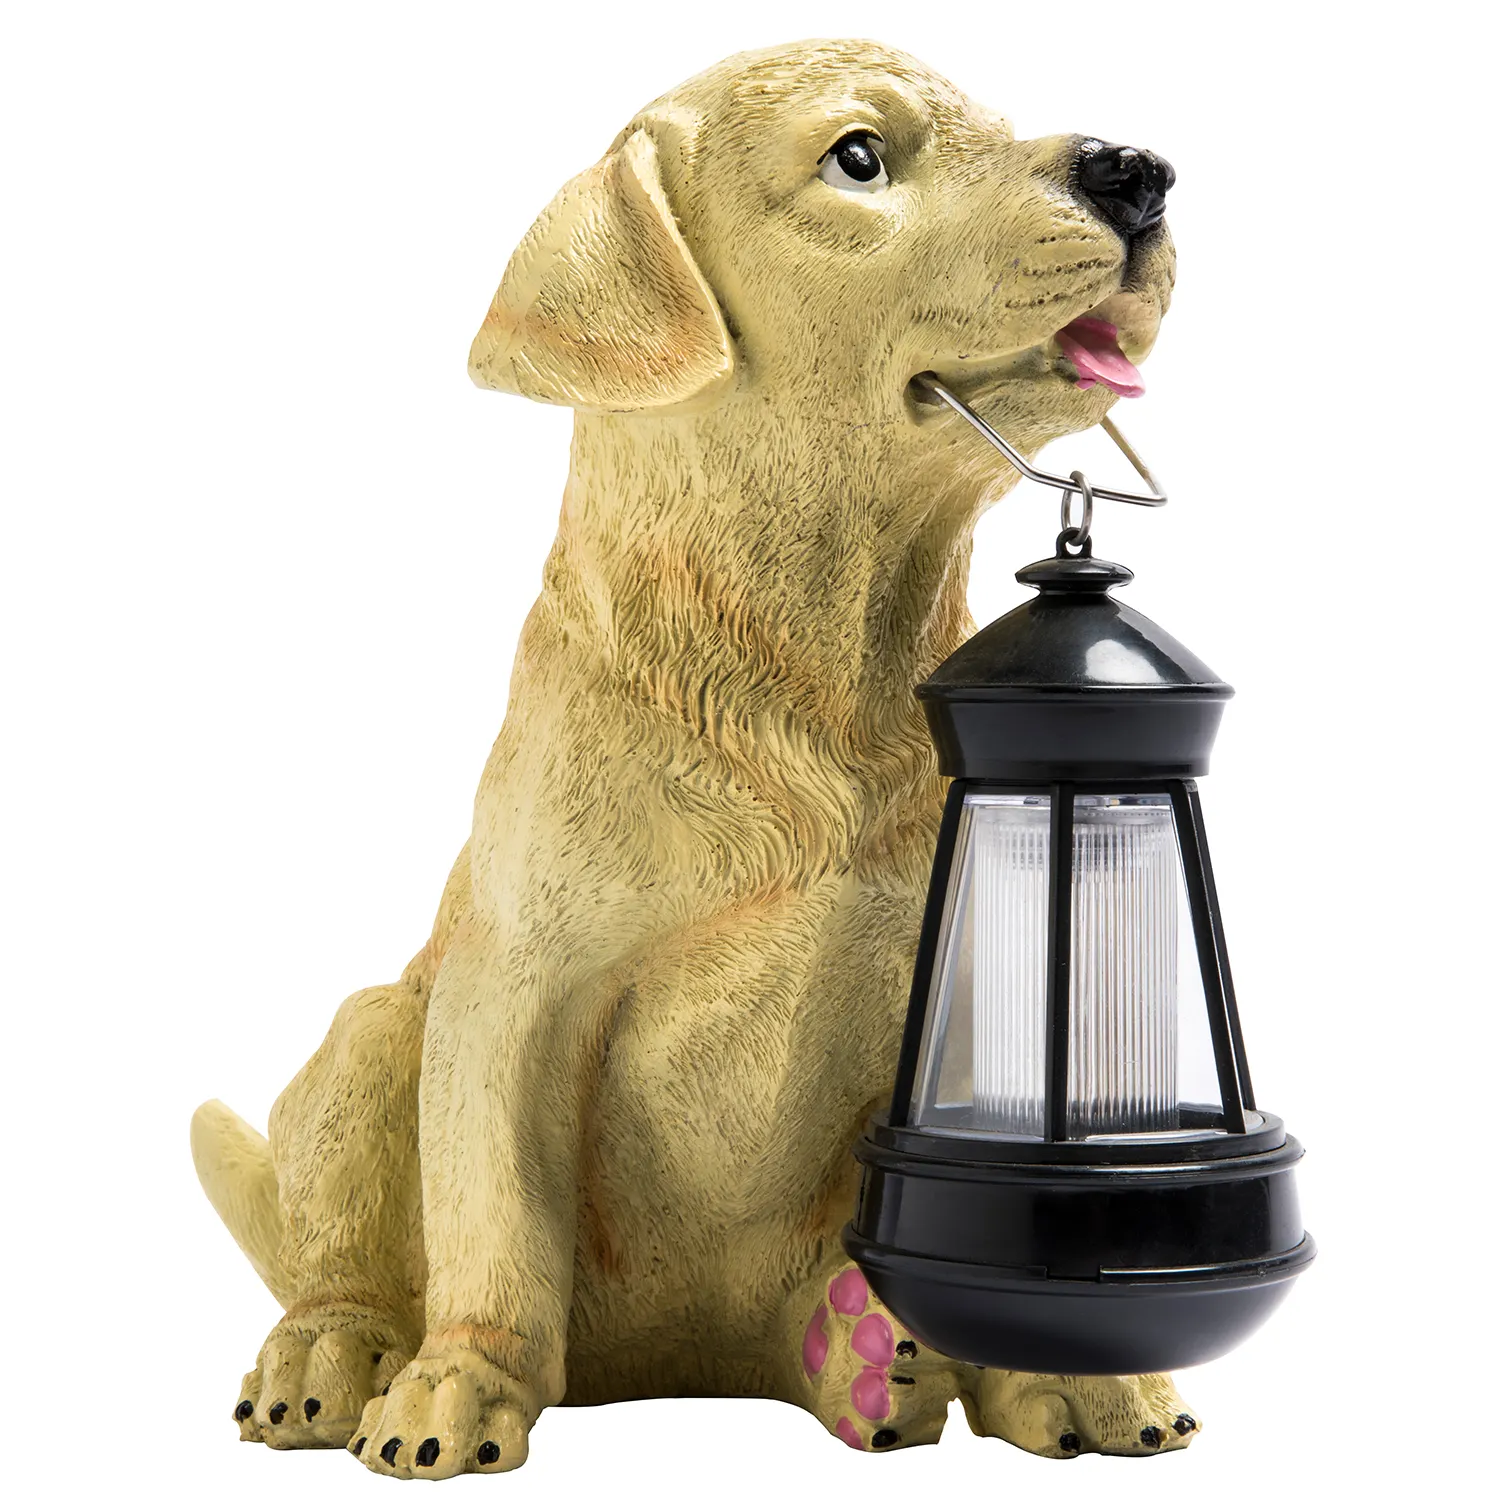 XLTD-510 שמש גן אור ספוט סוג עמיד למים שרף בעלי החיים בצורת כלב שמש גן led אור